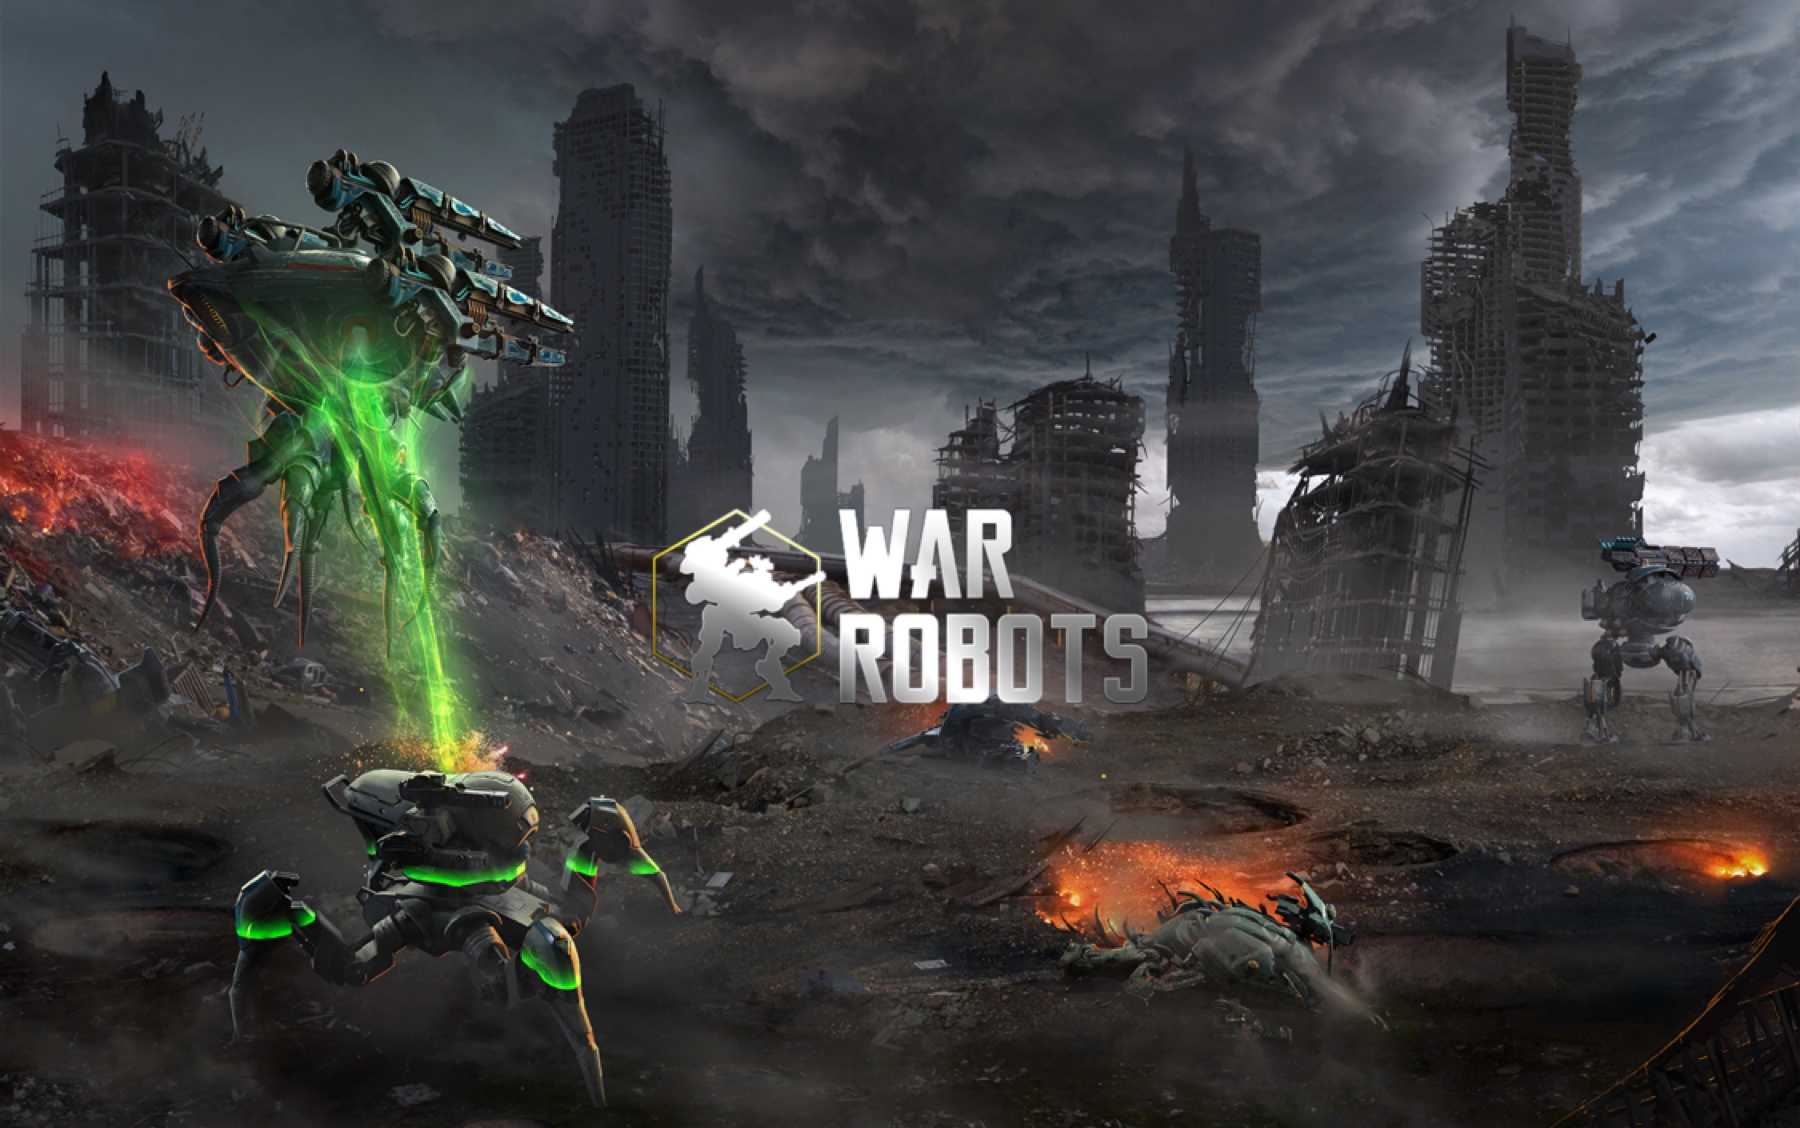 warrobots背景音乐图片